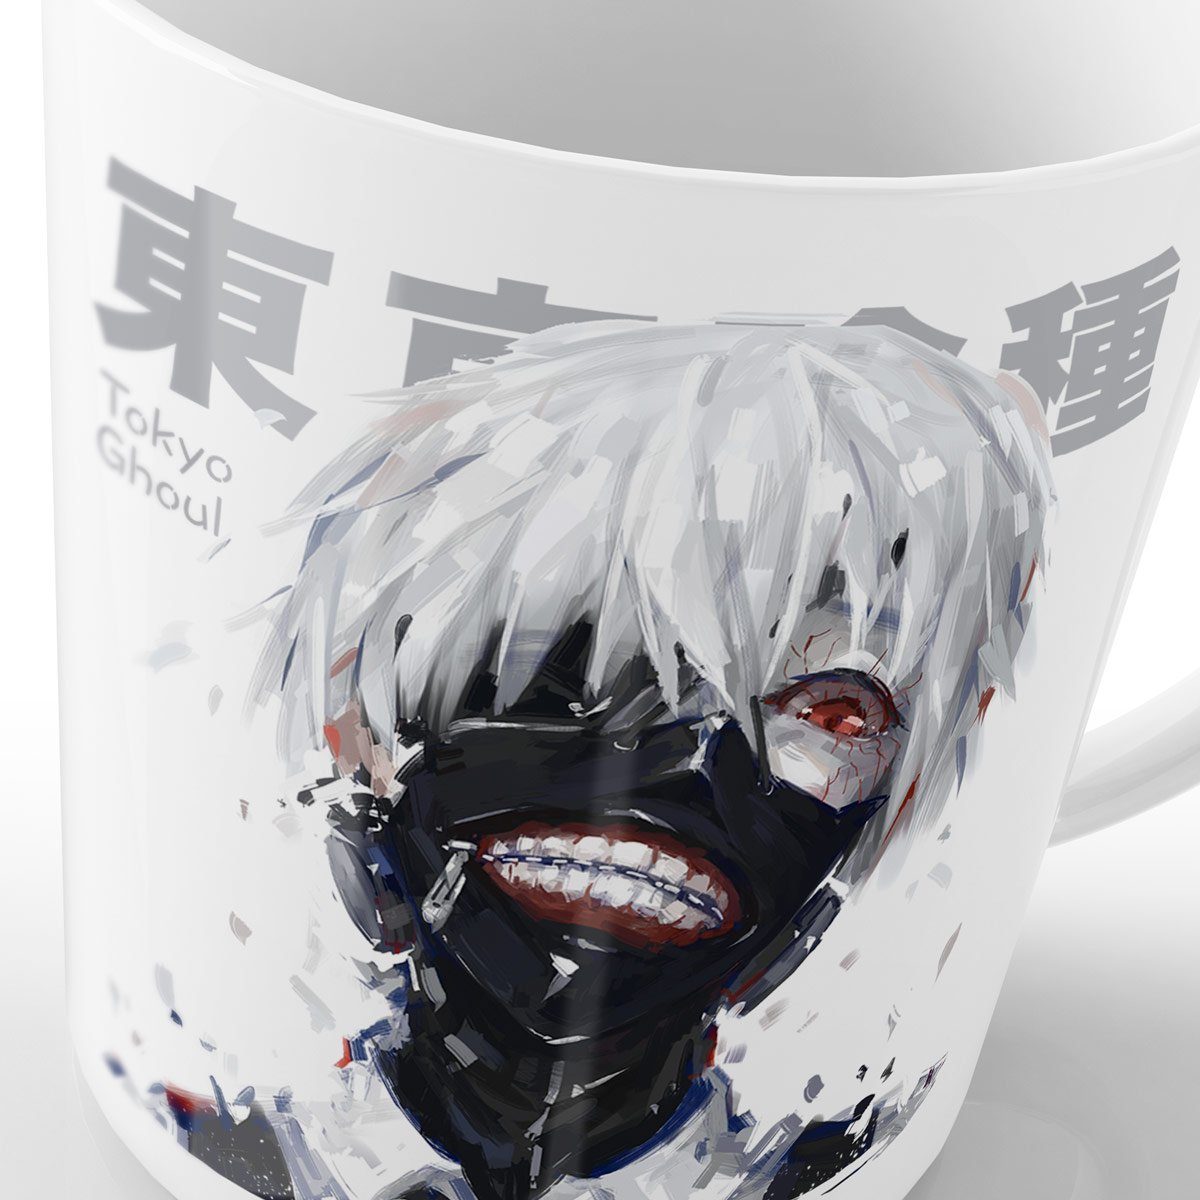 japanisch ghoul Ghoul style3 manga Kaffeebecher tokyo Kaneki anime cosplay tokio Keramik, ken merchandise Tasse, Tasse